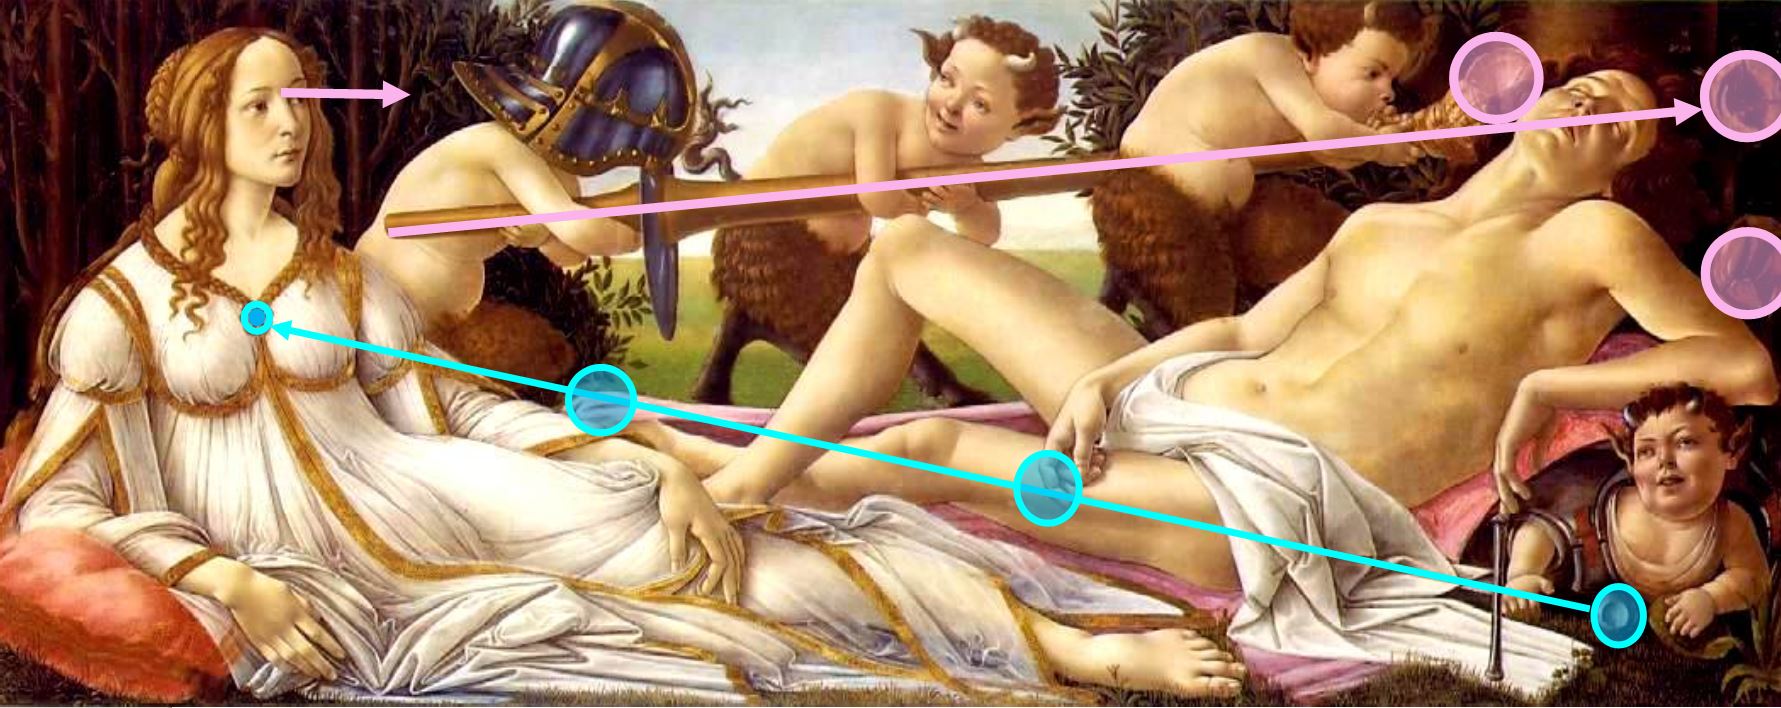 Botticelli_Venus_Mars schema sexuel